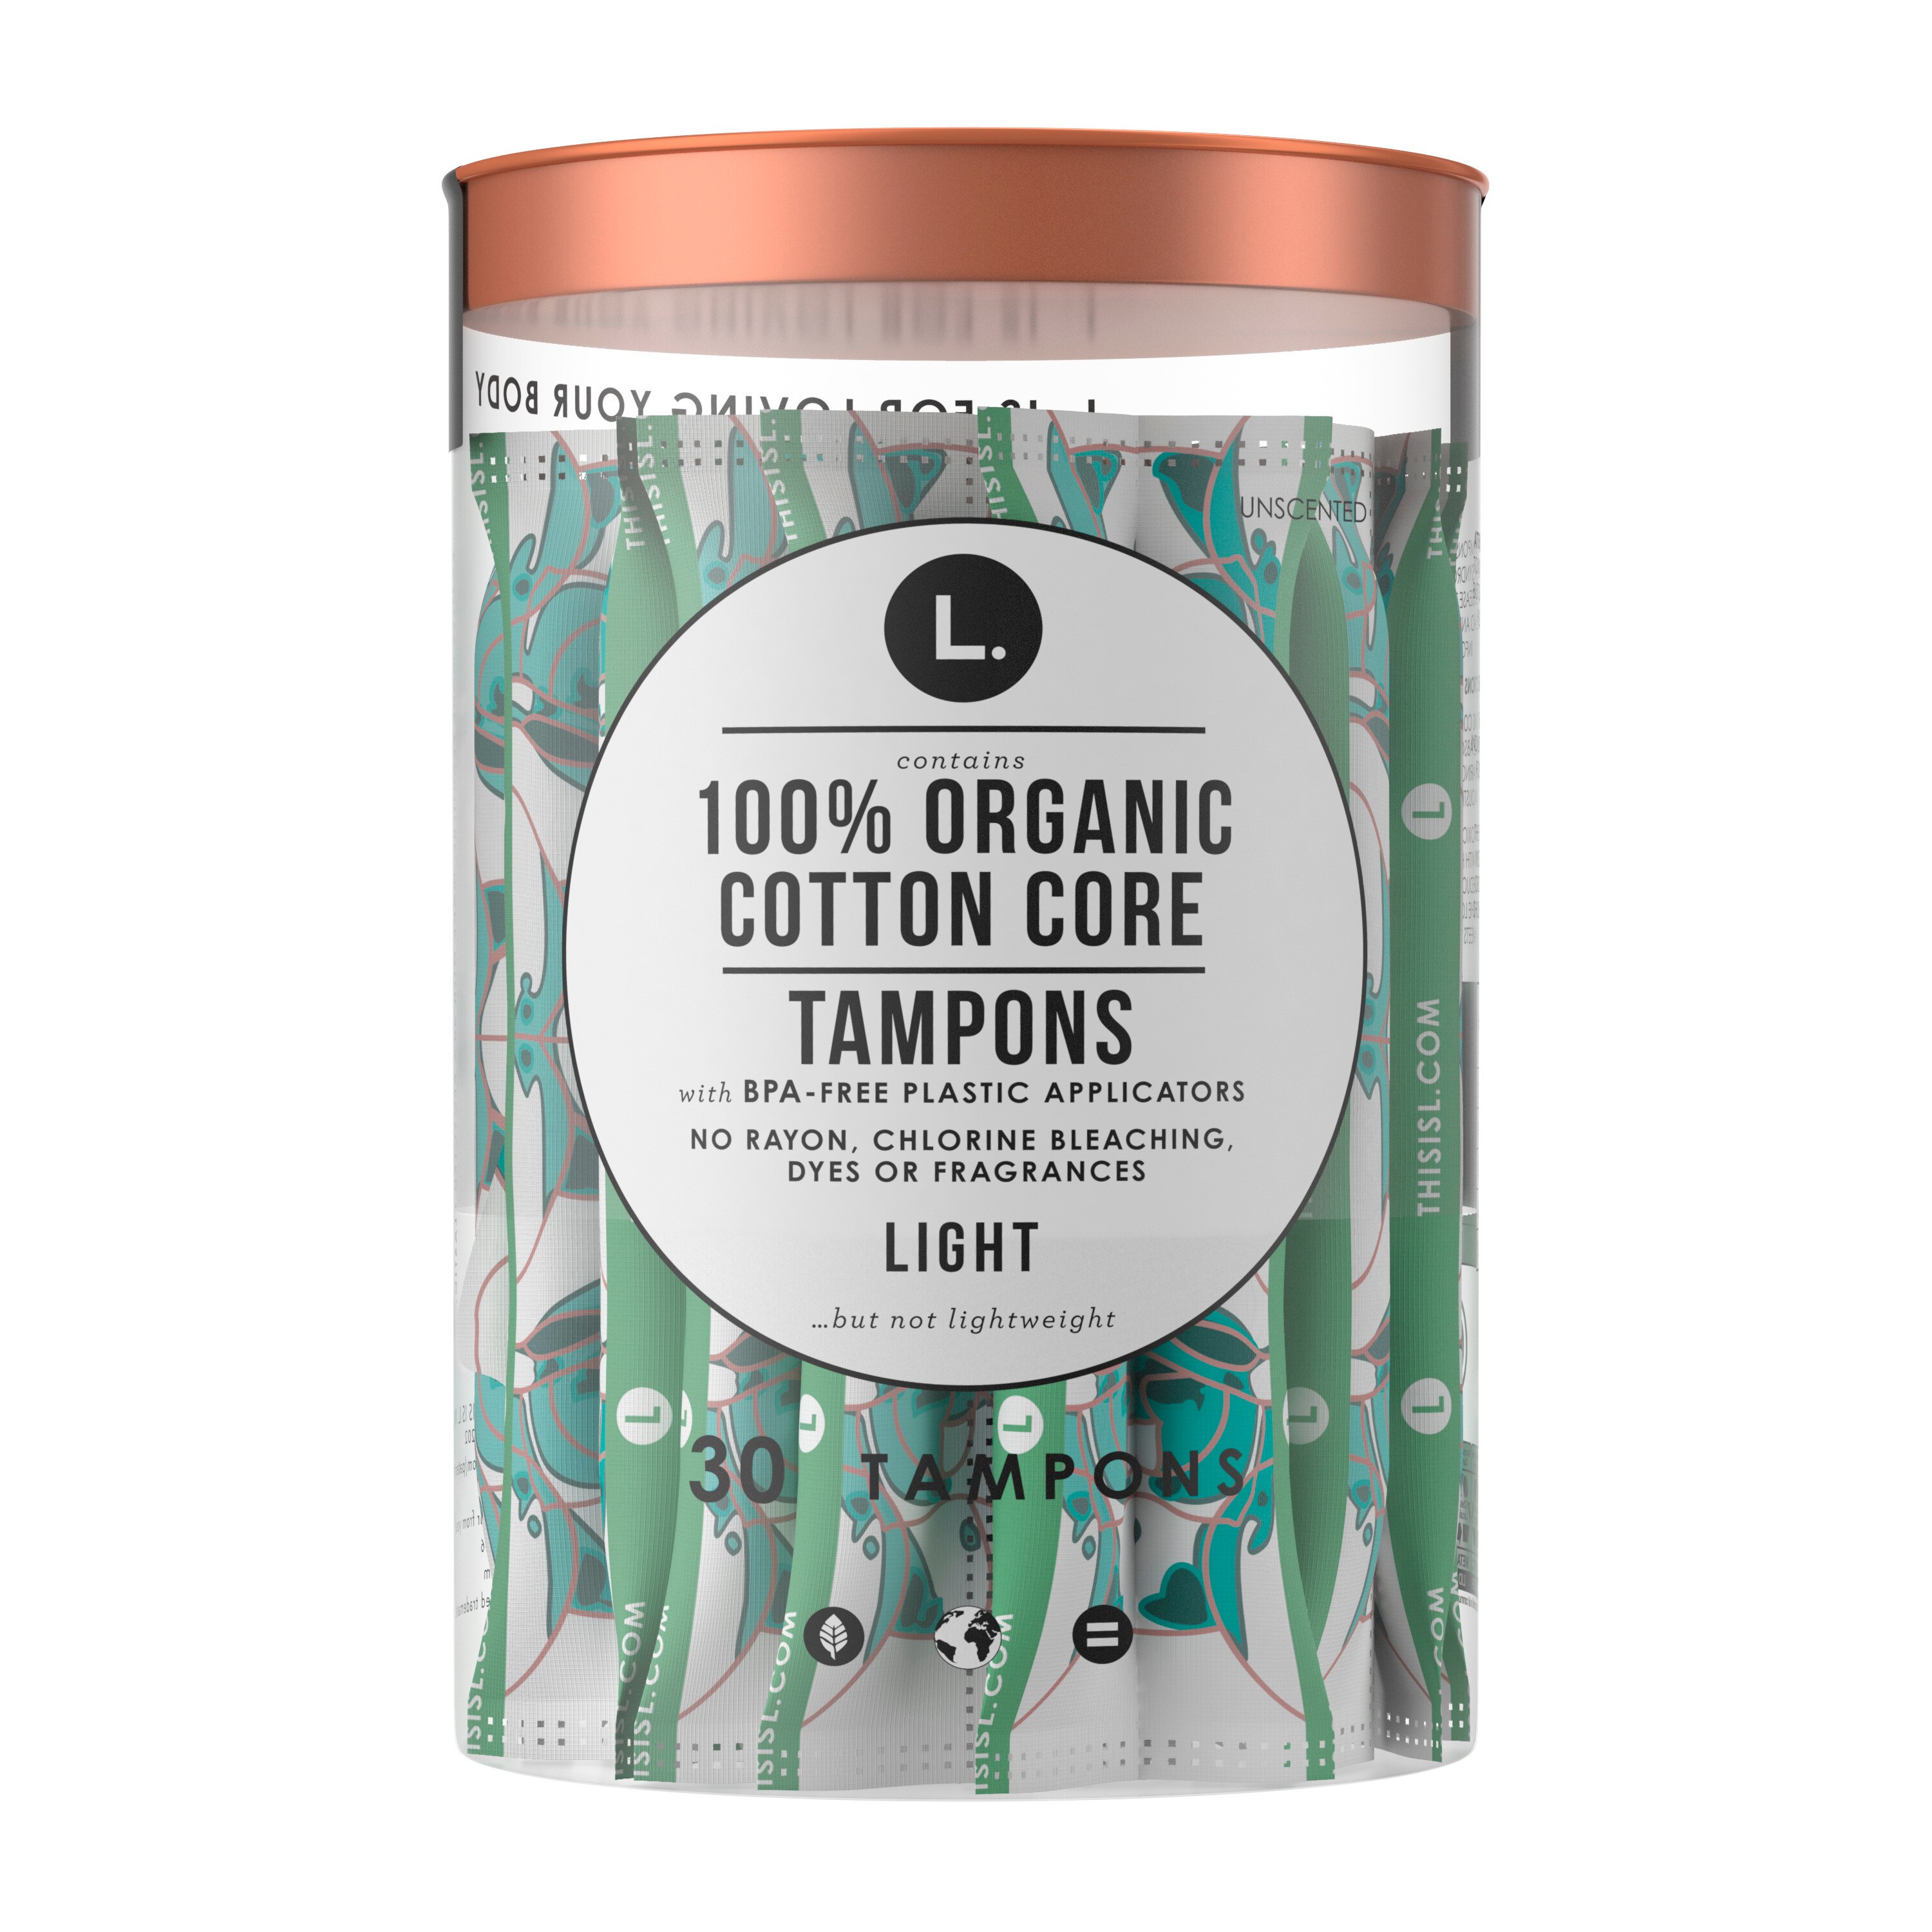 L. Organic Cotton Tampons, Light, 30 CT